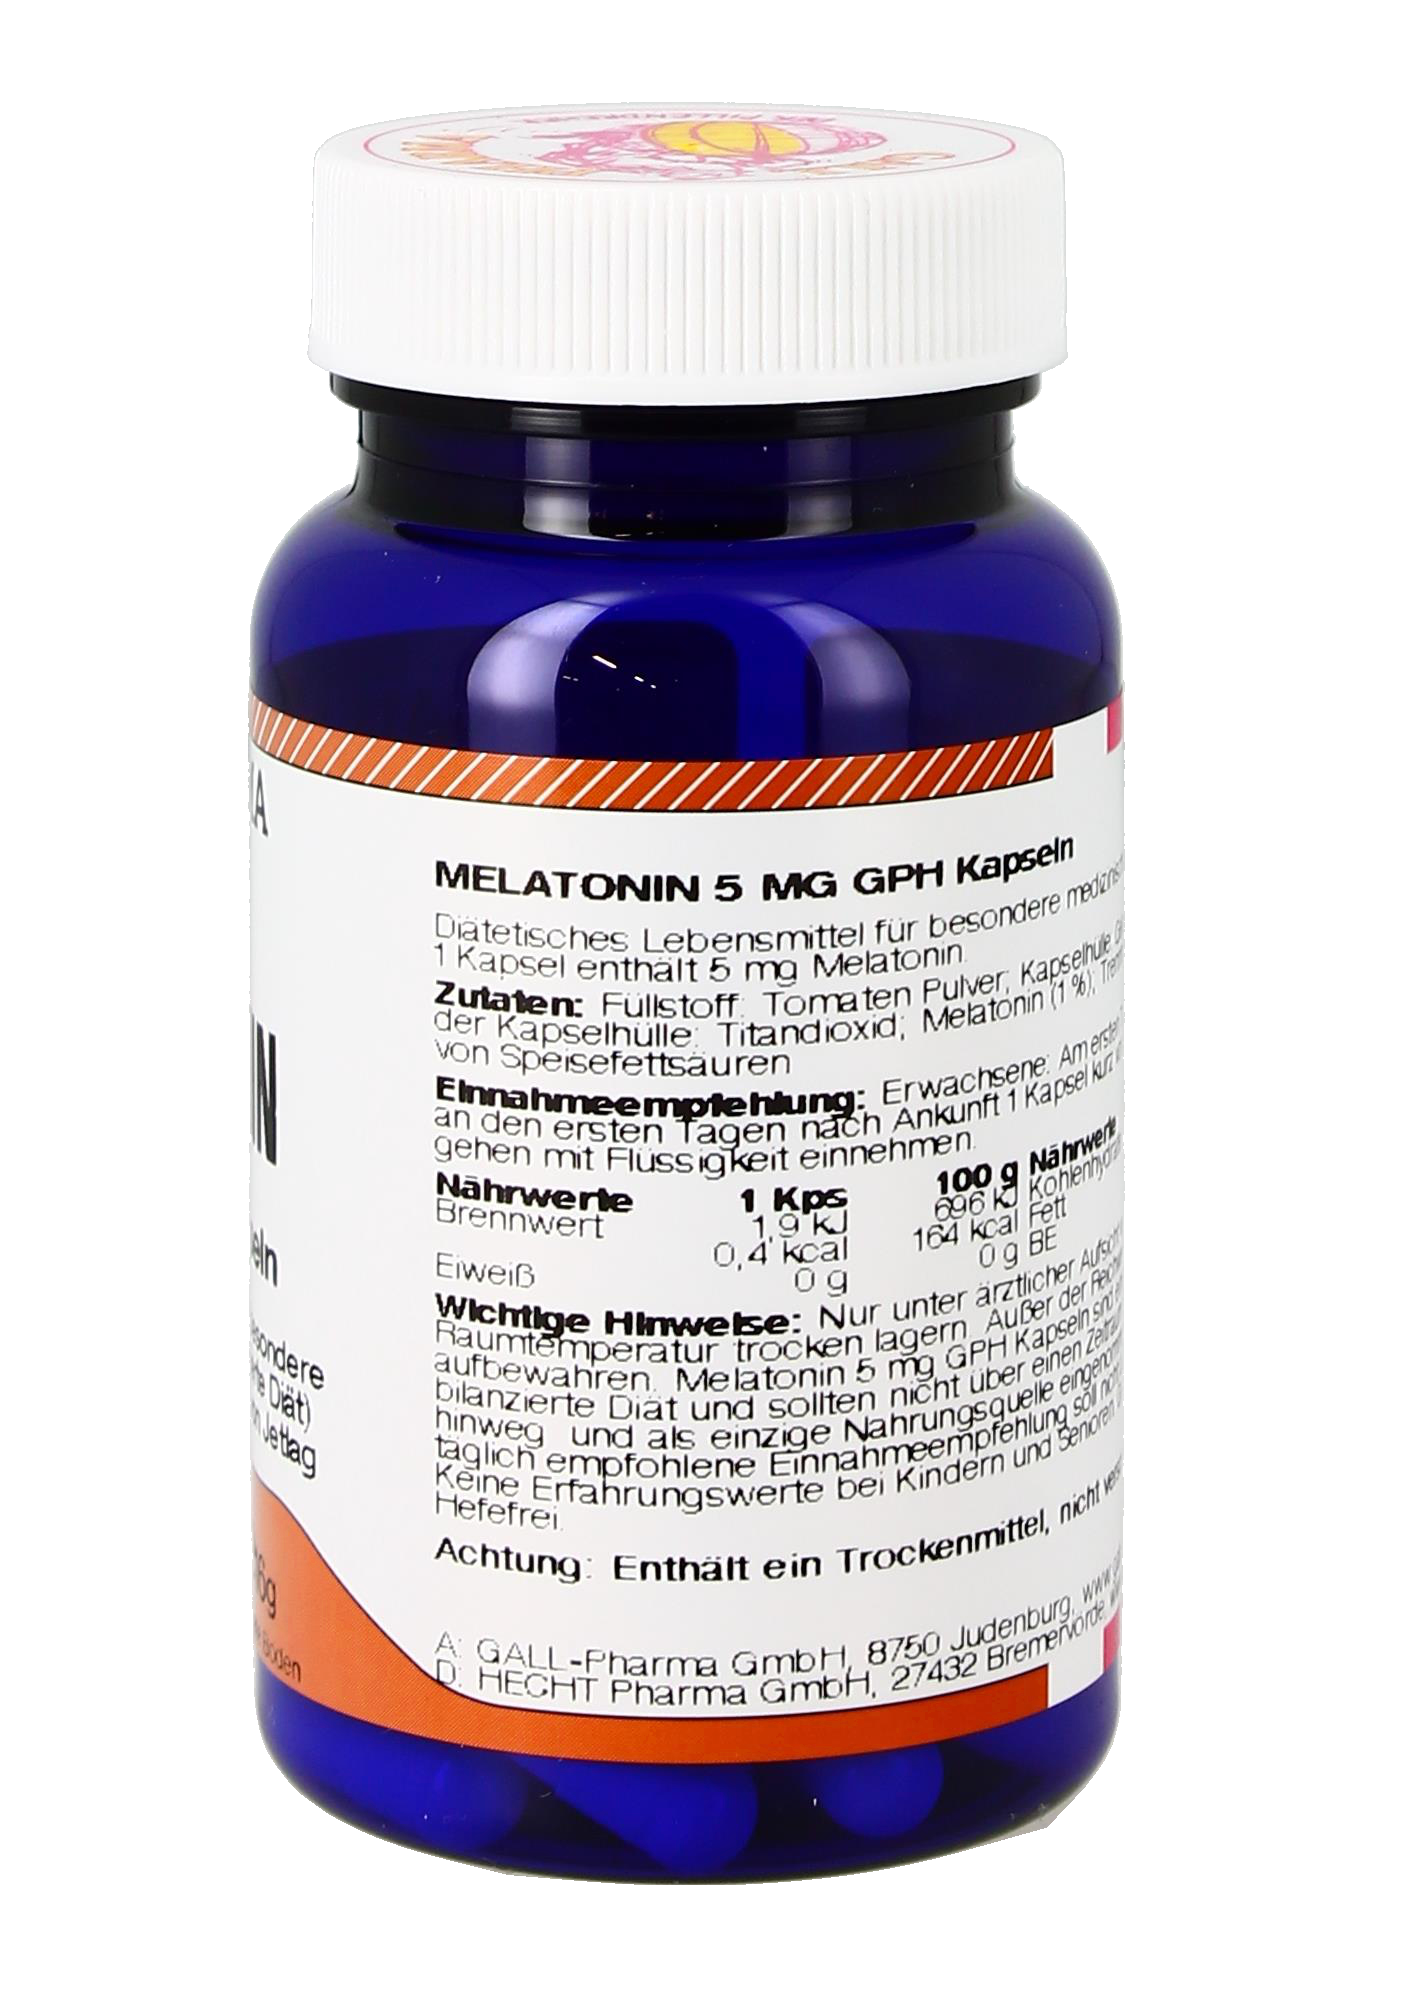 Melatonin 5,0 mg GPH Kapseln